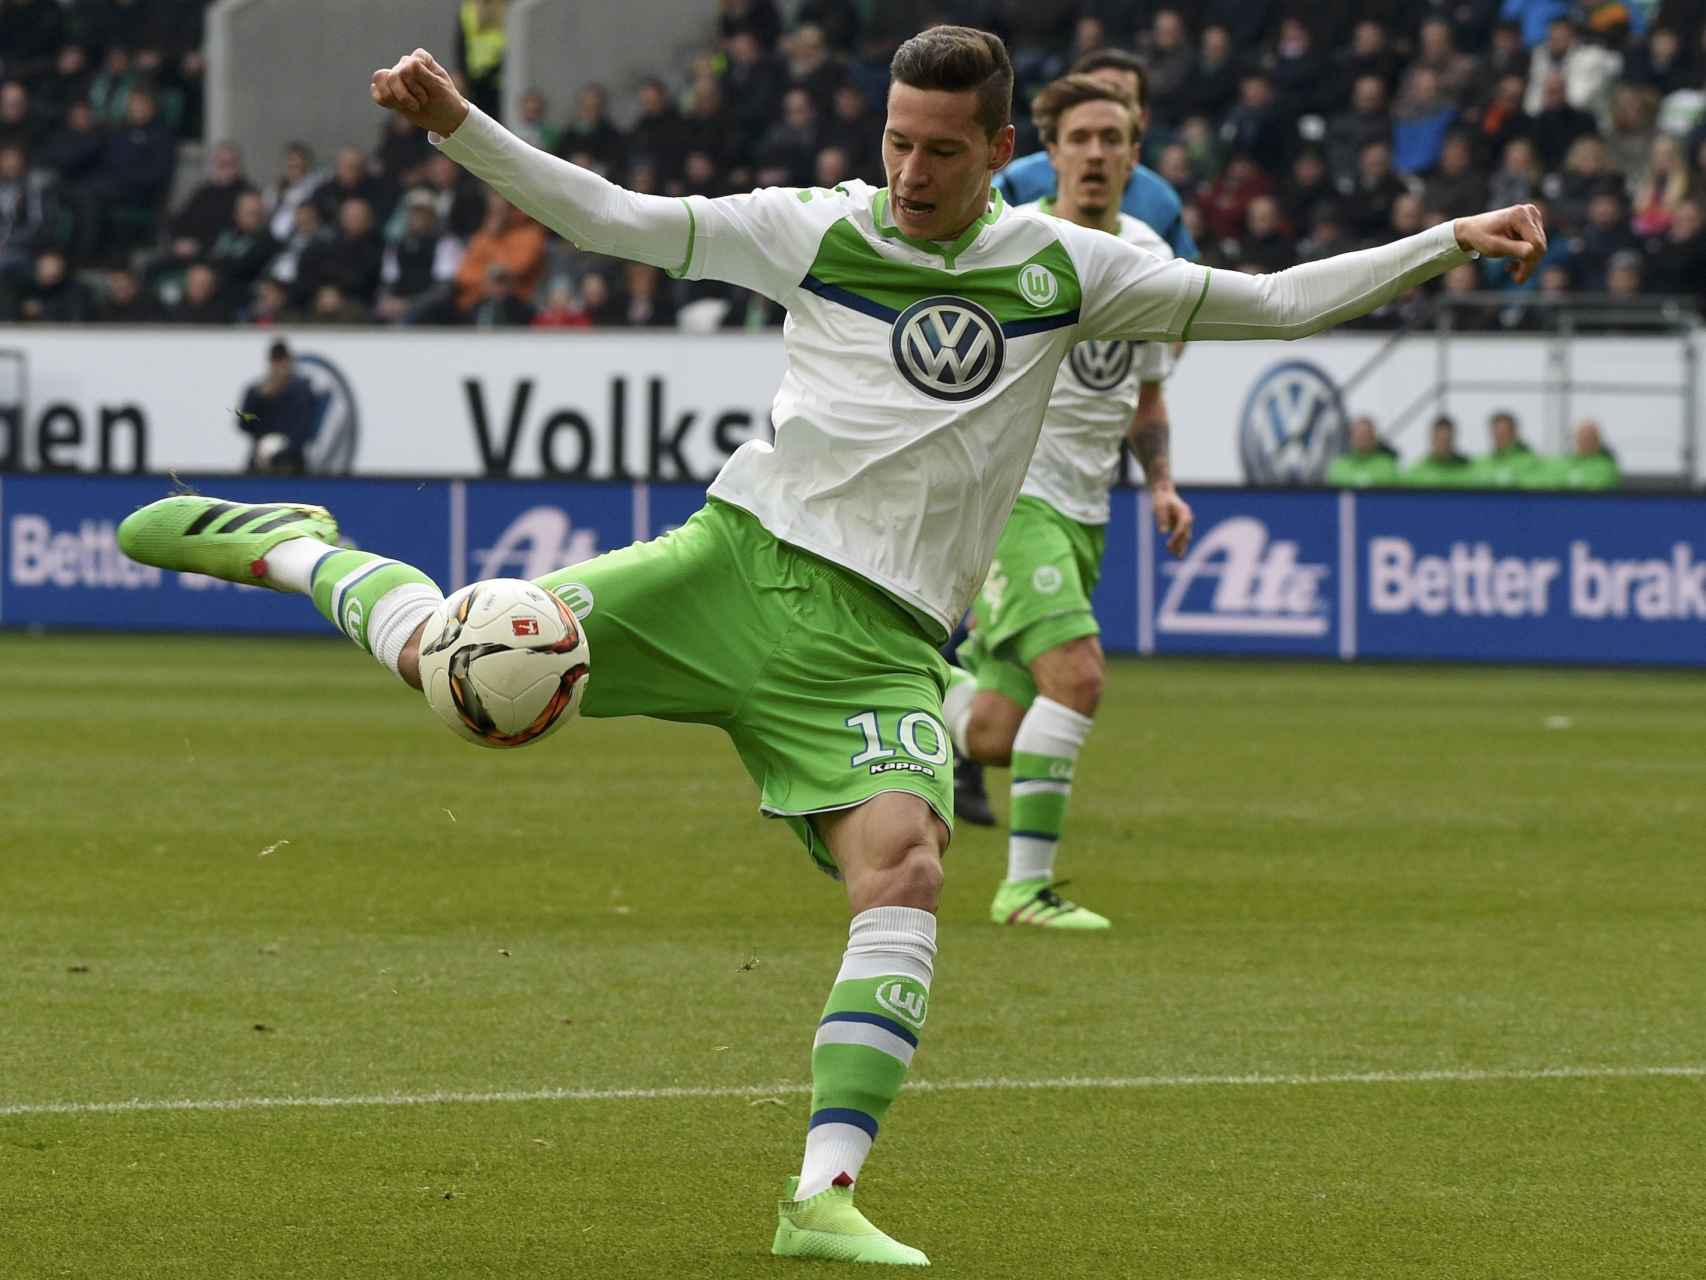 Draxler golpea la pelota durante un partido de la Bundesliga.